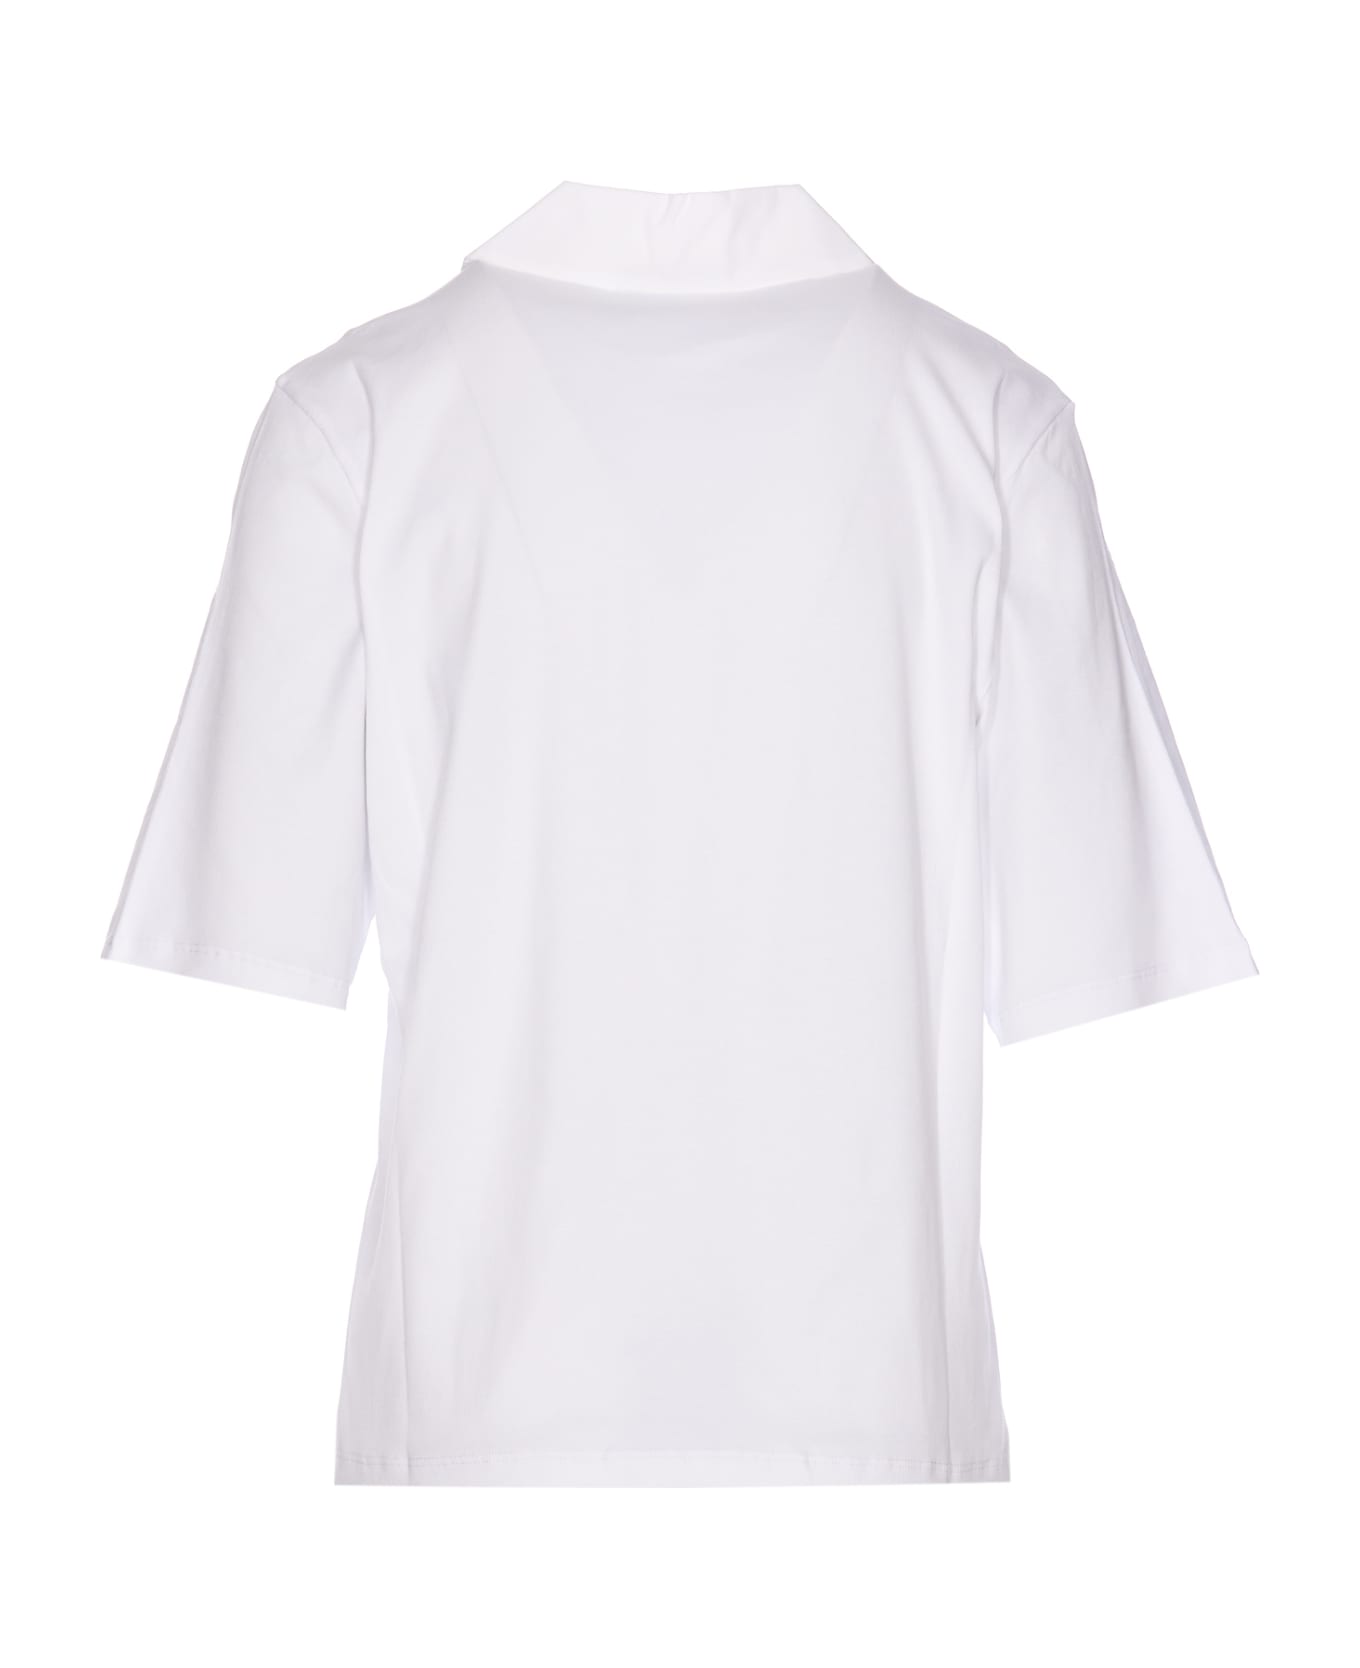 Fabiana Filippi Popeline And Jersey Shirt - White ニットウェア